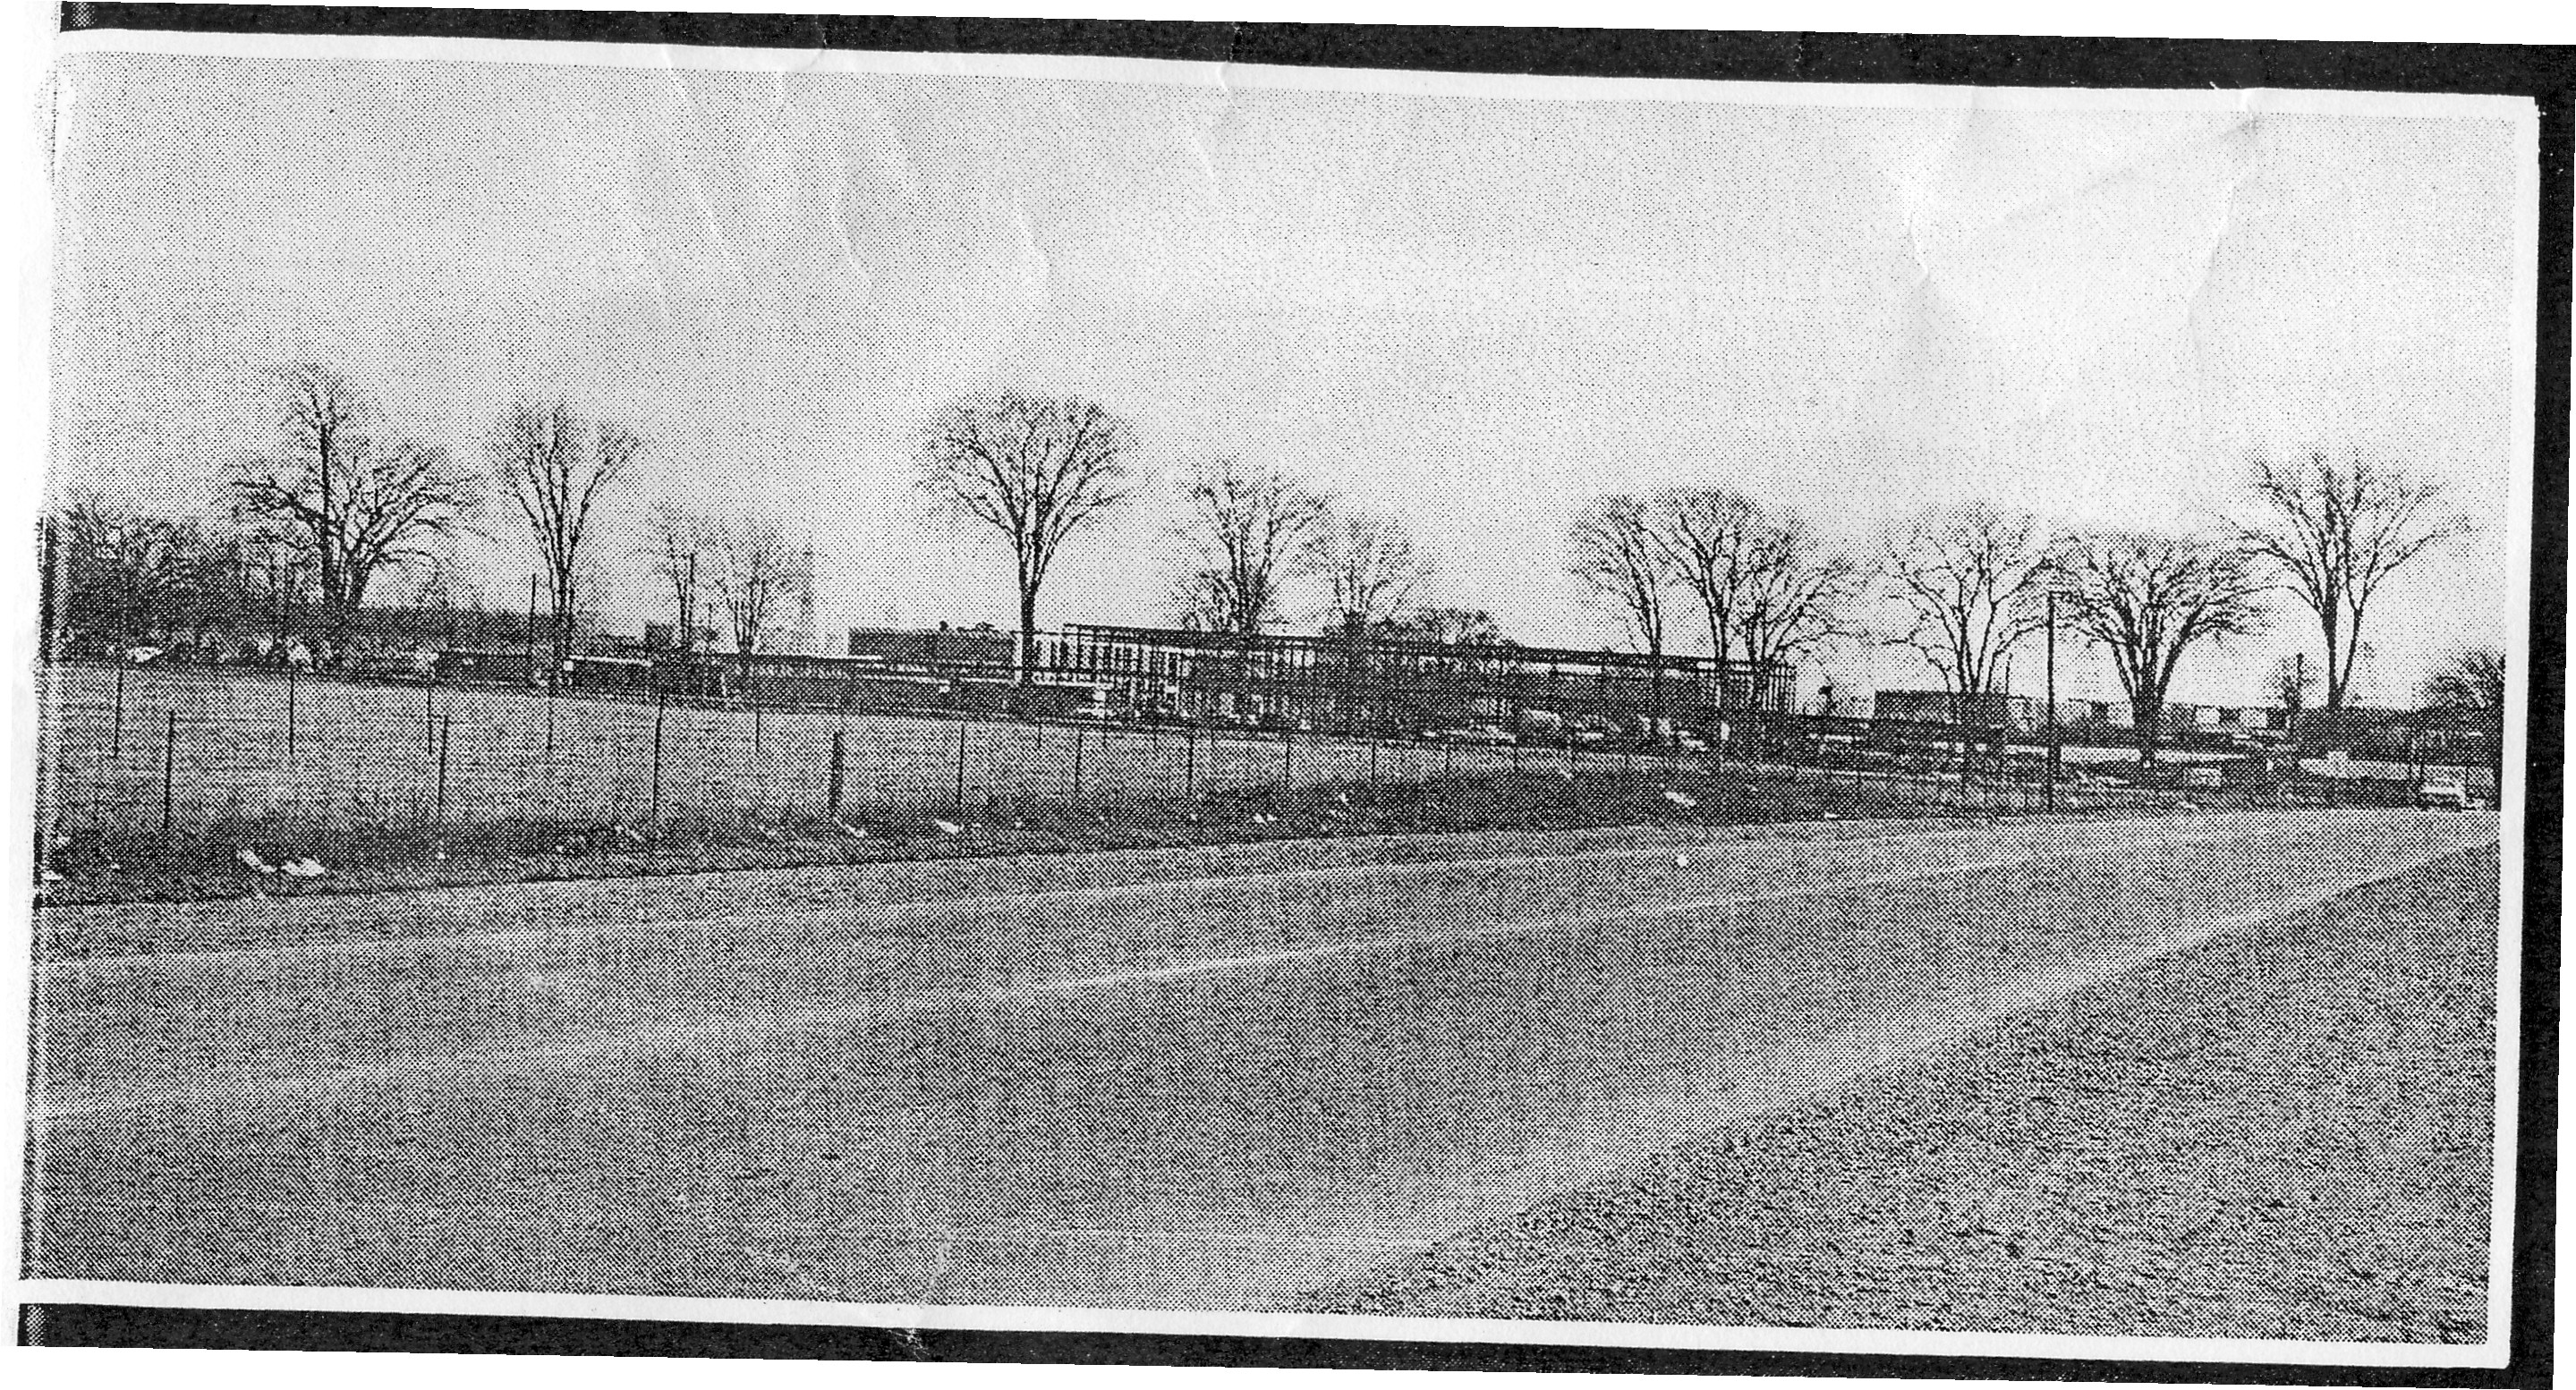 Merivale Road 1964